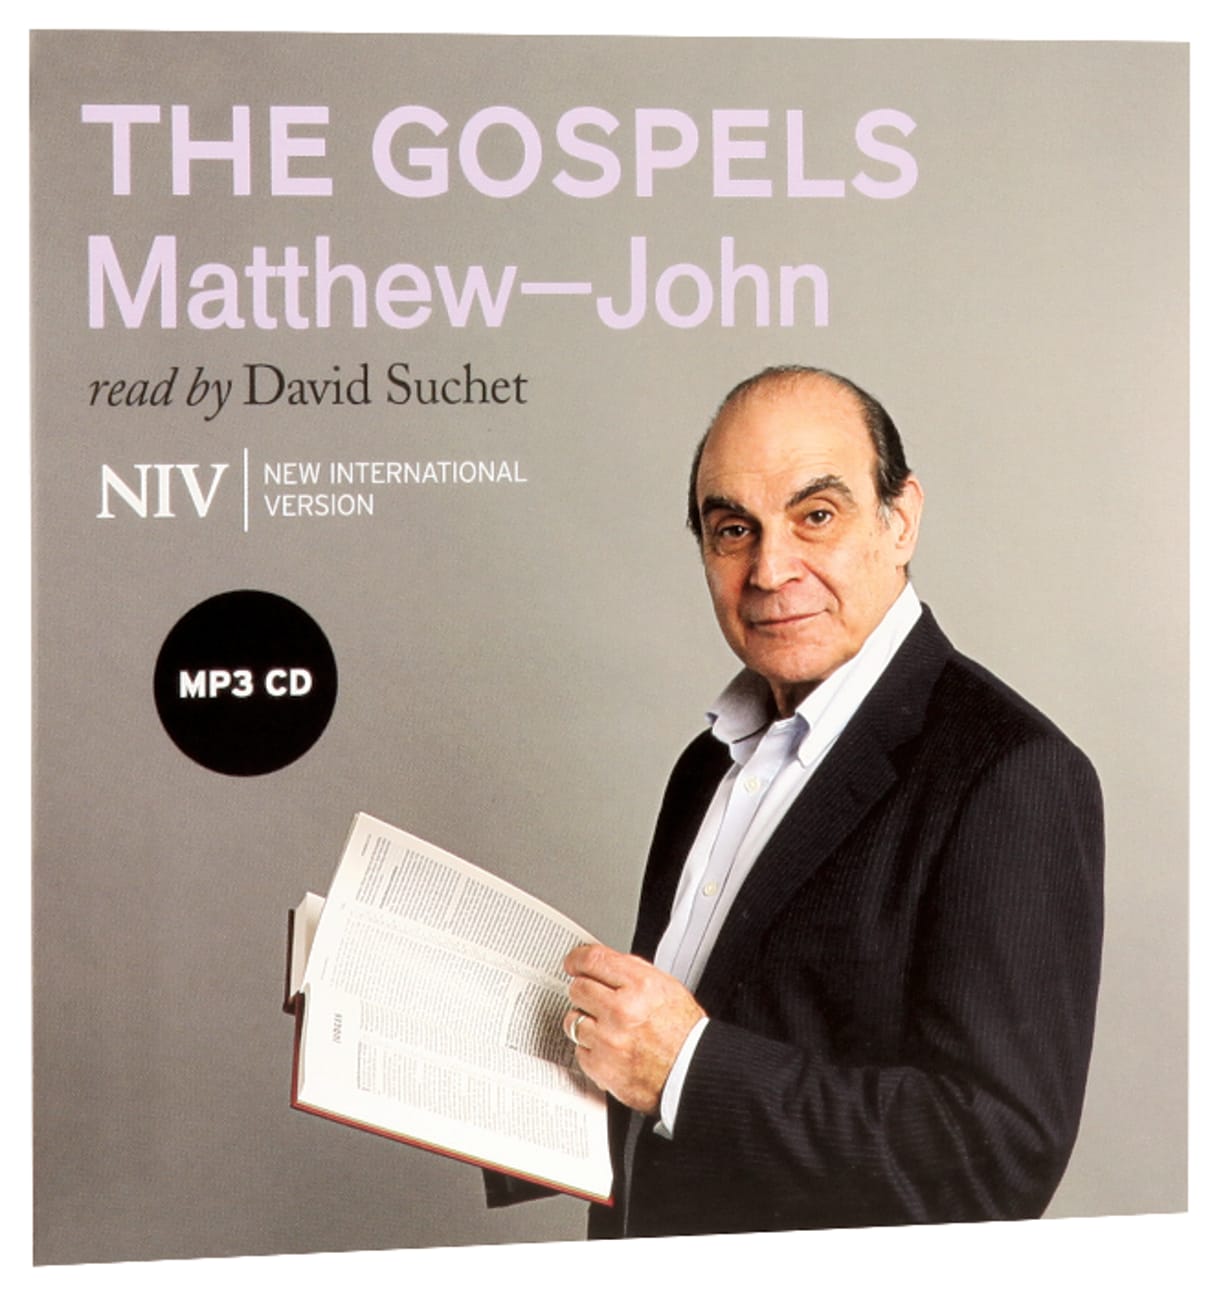 NIV Holy Bible: The Gospels MP3 Audio (Read By David Suchet) (Matthew-john) Compact Disk